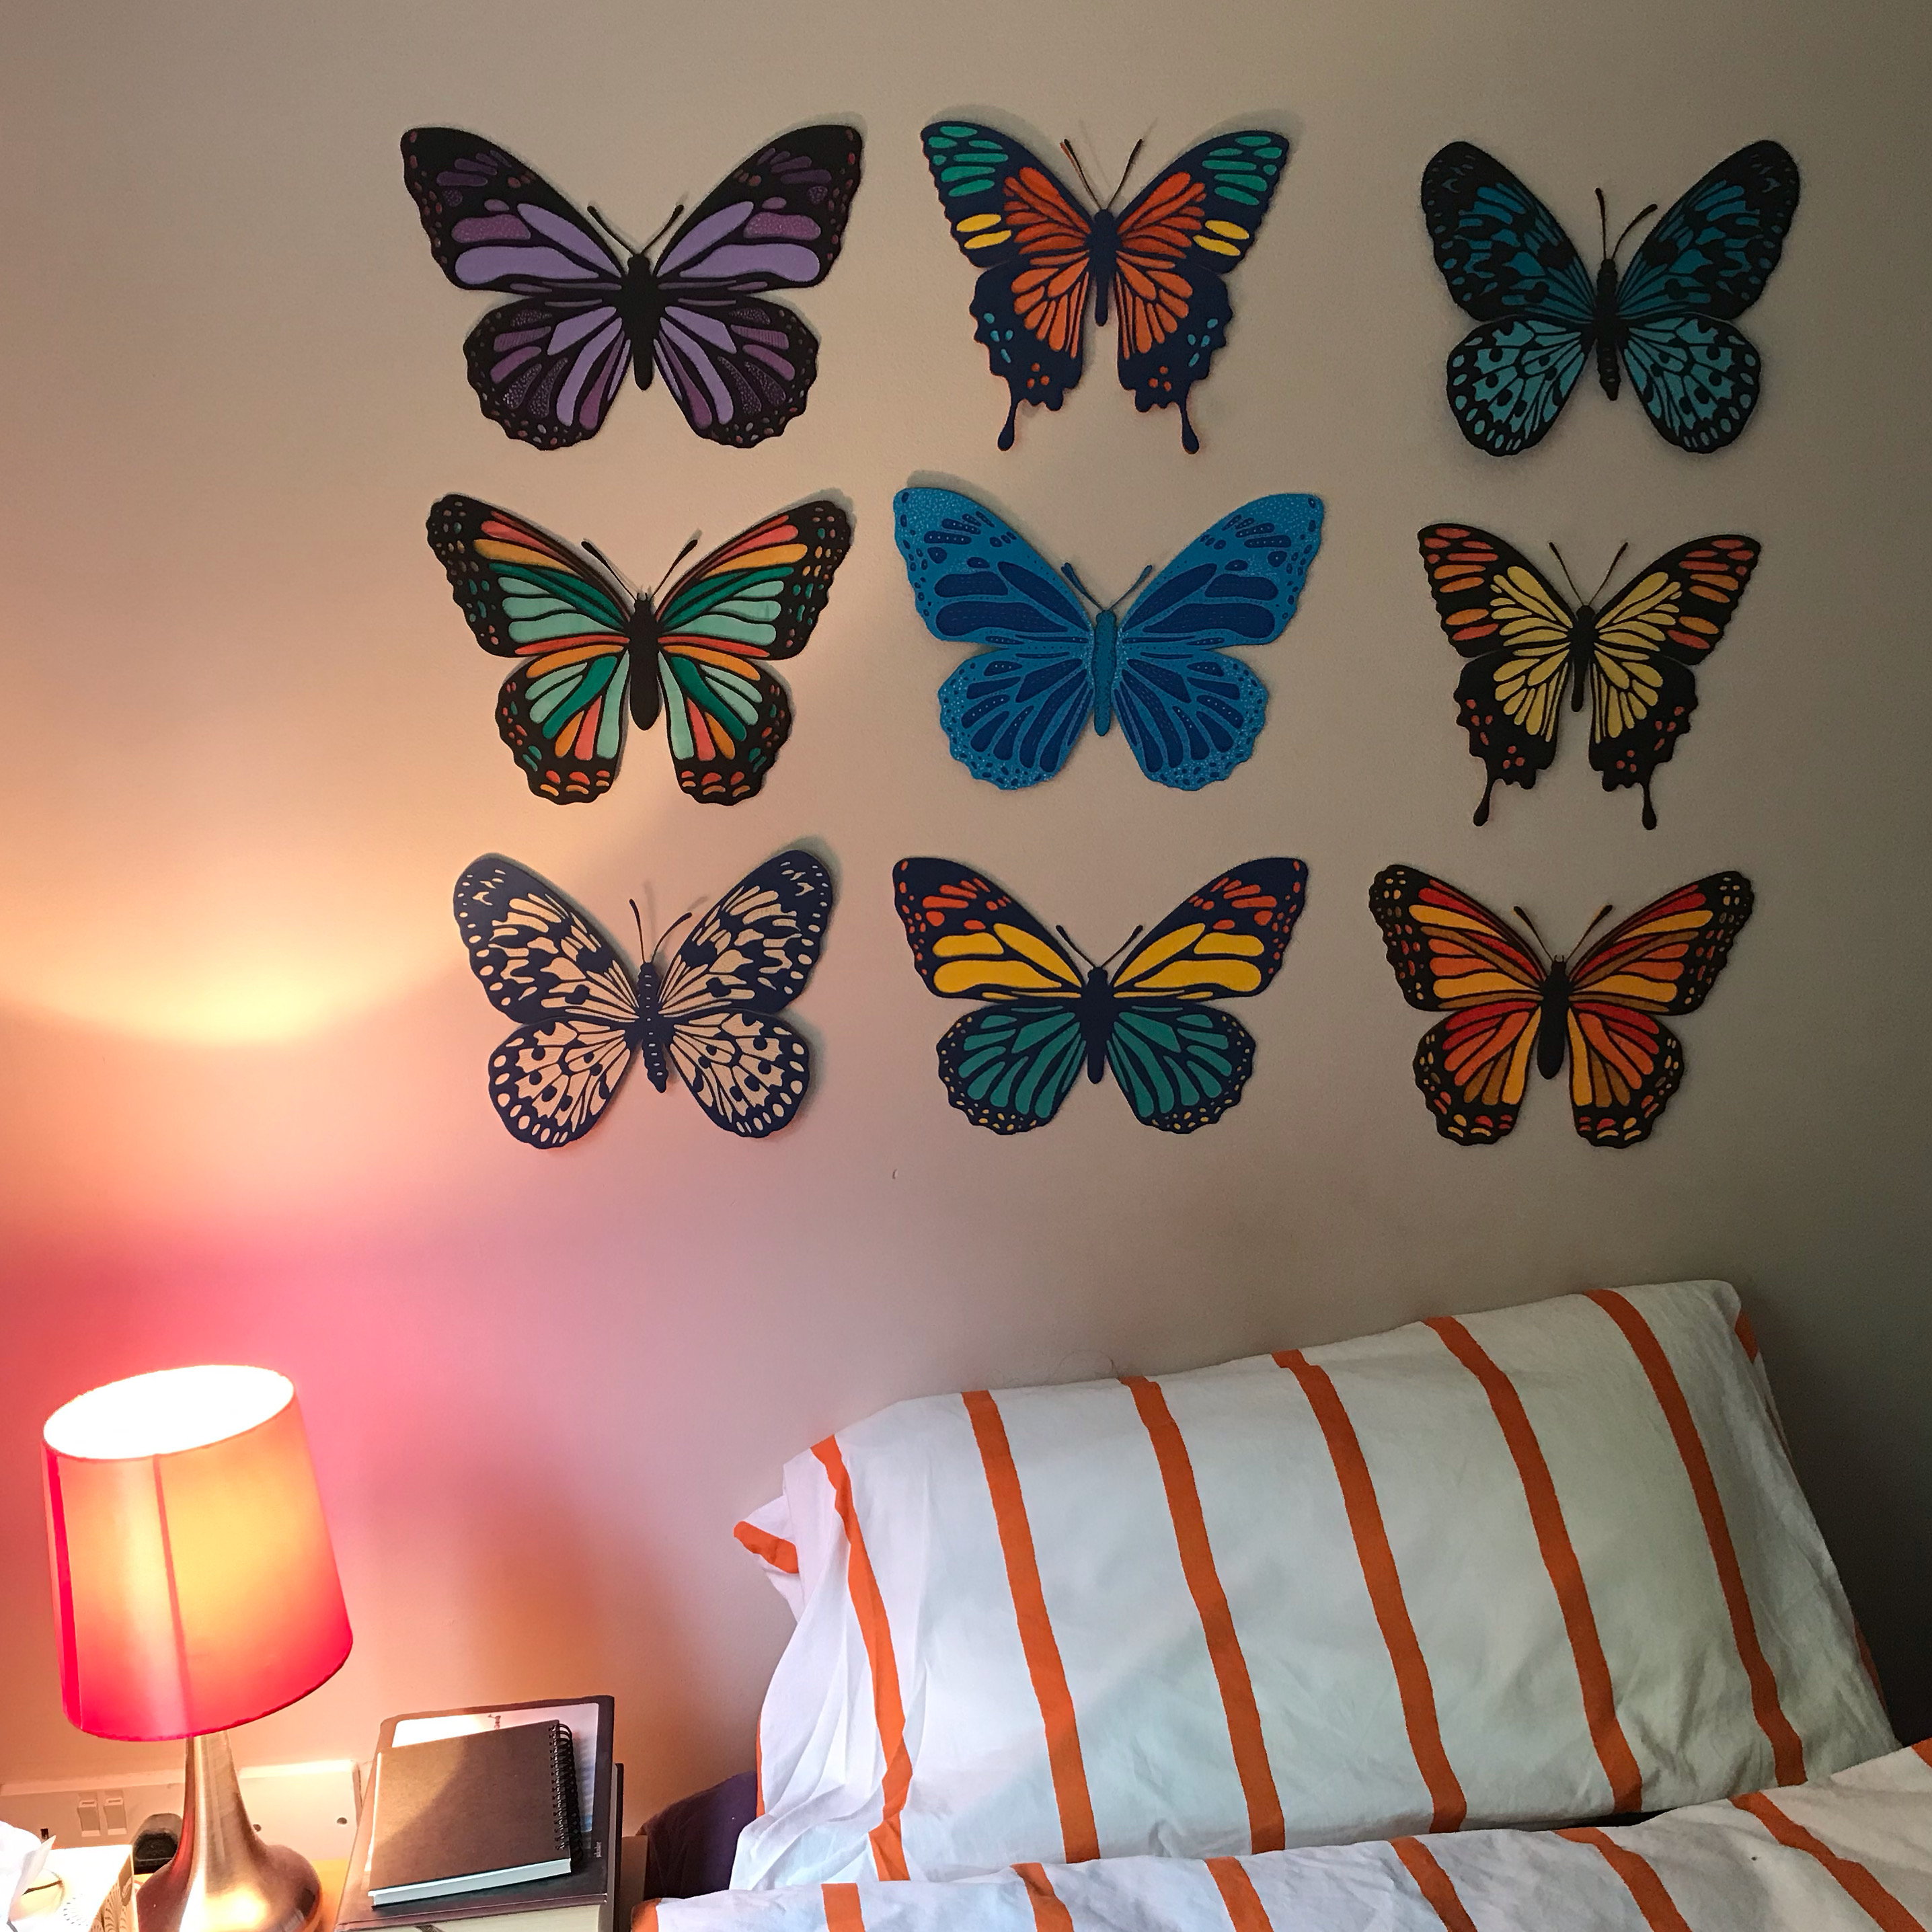 Butterfly walldecor